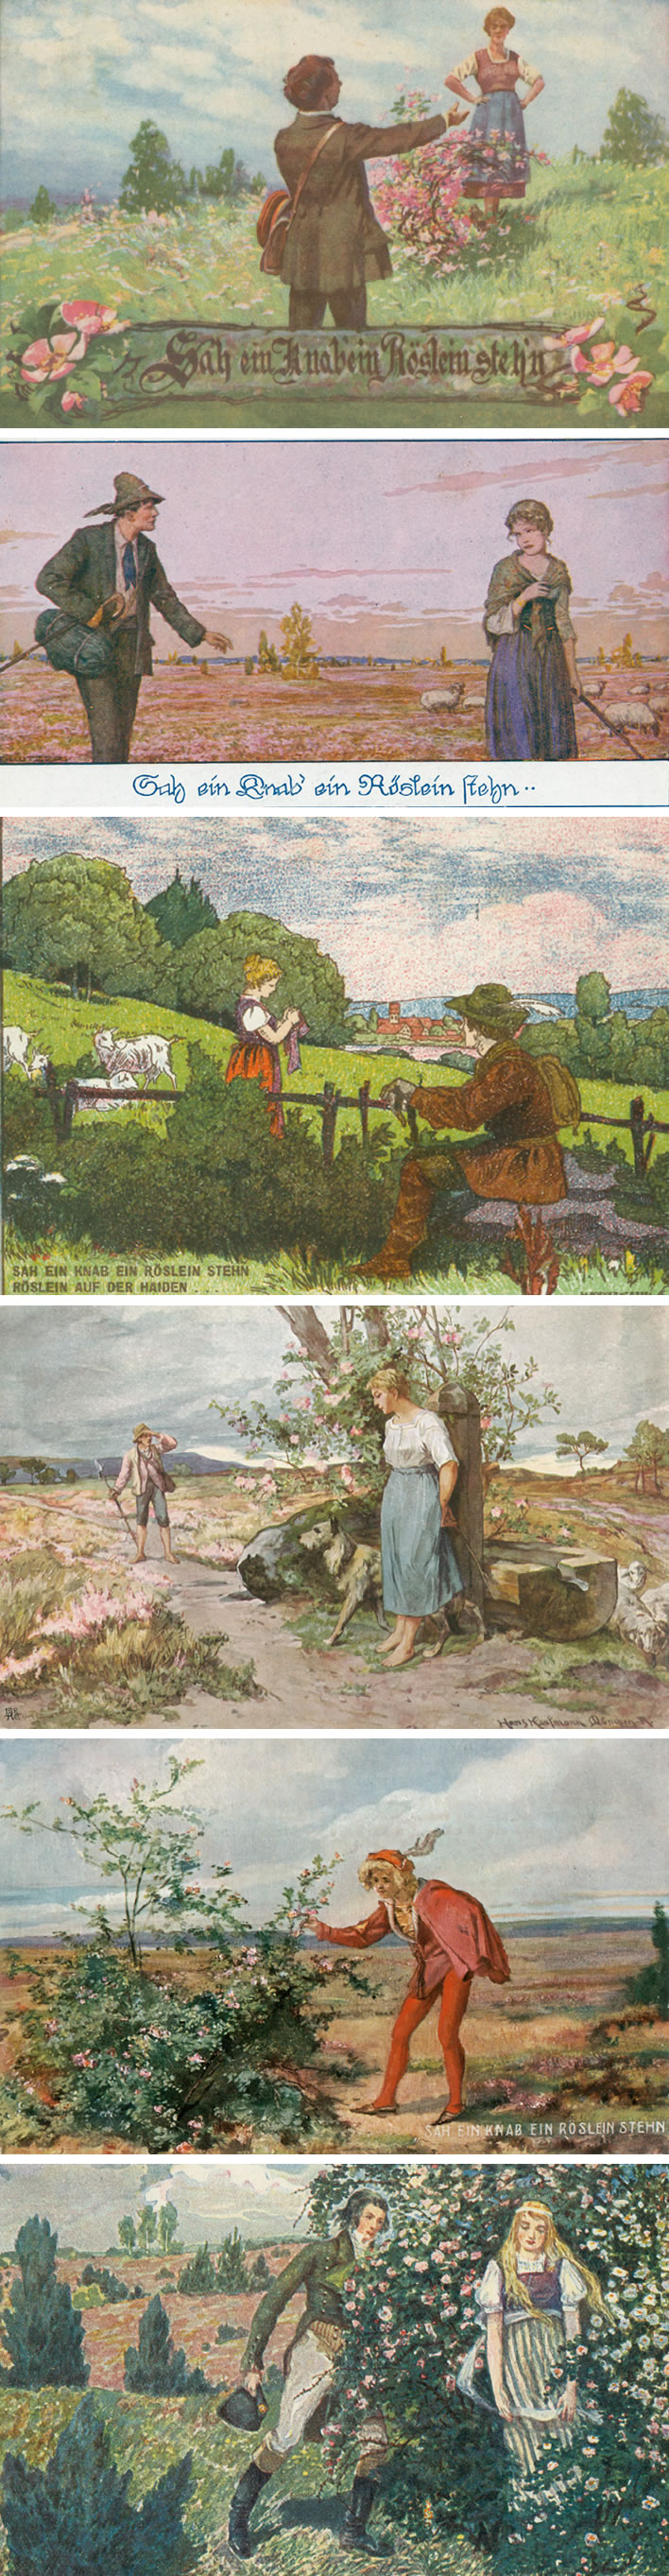 'Heidenröslein' illustrations on postcards